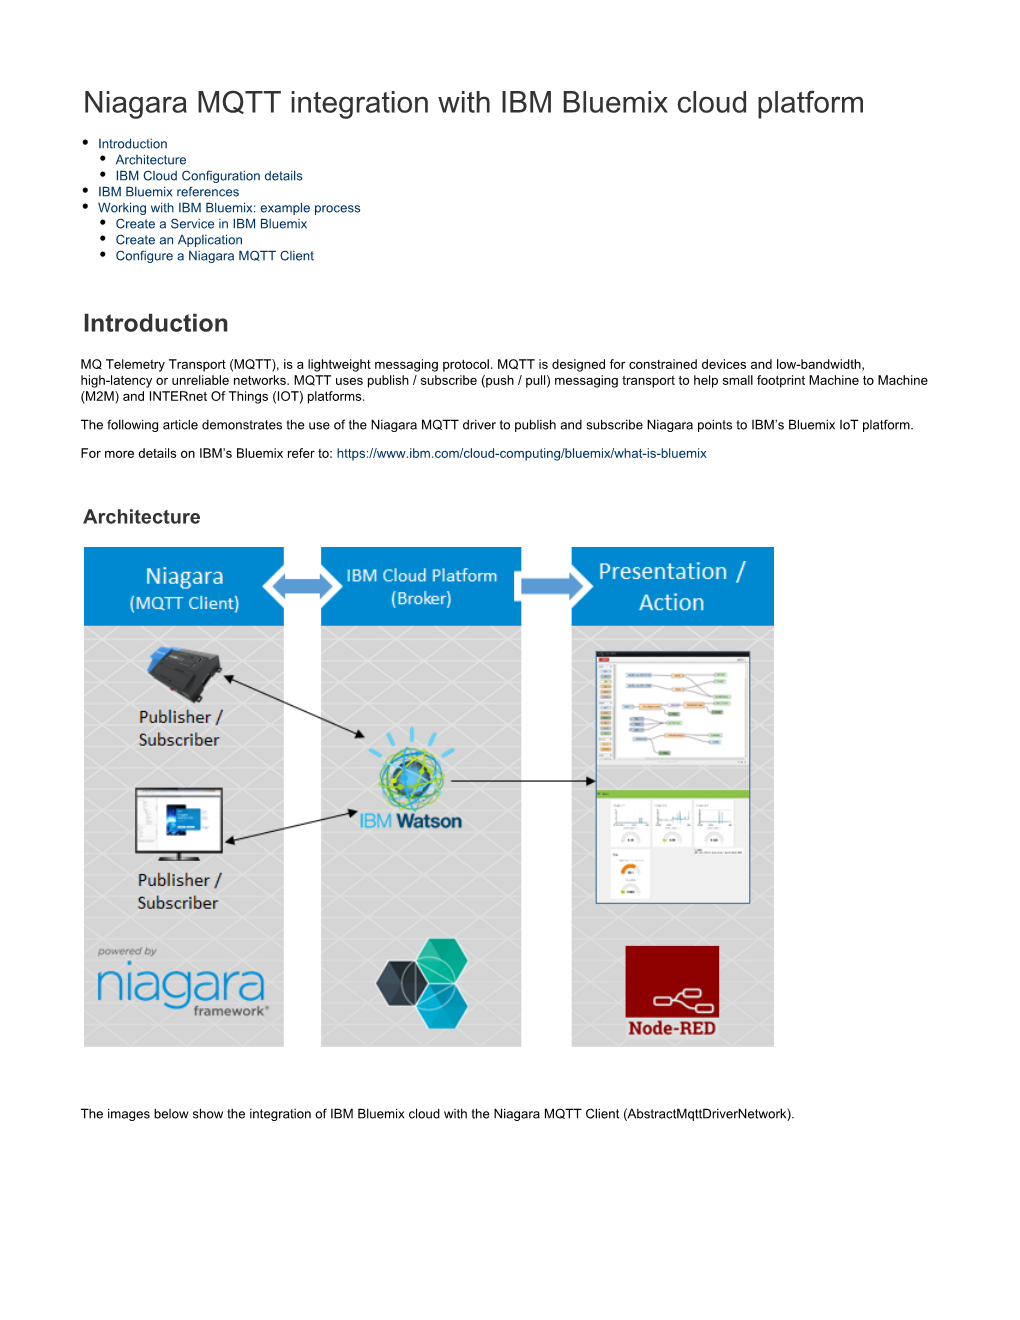 Niagara MQTT Integration with IBM Bluemix Cloud Platform